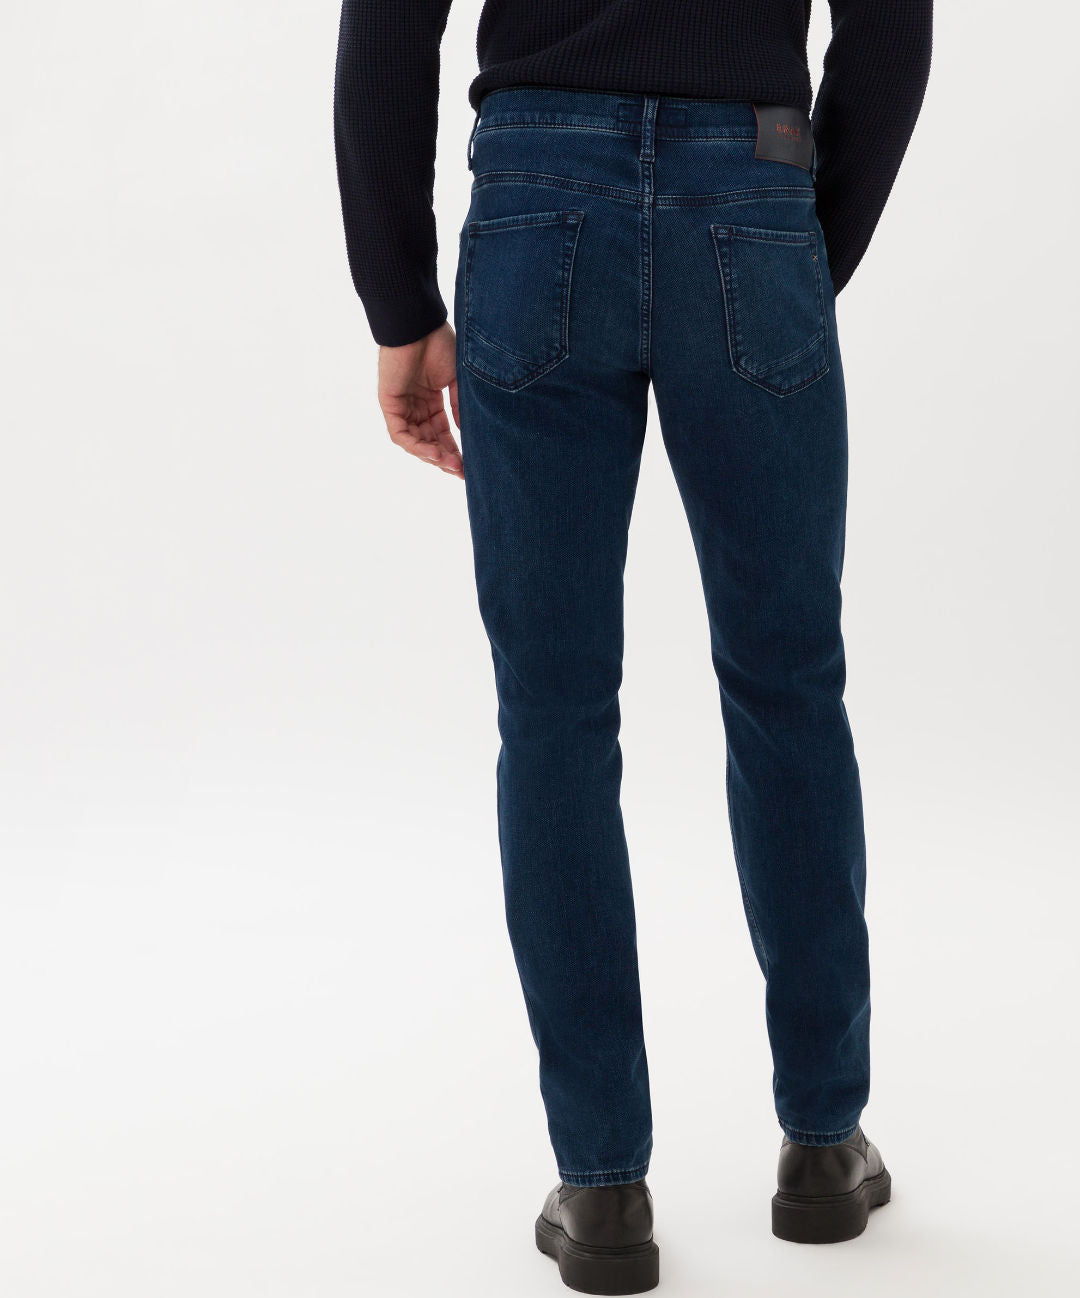 Brax Chuck five-pocket stretchy – jeans Lane Super Hi-FLEX: Savile